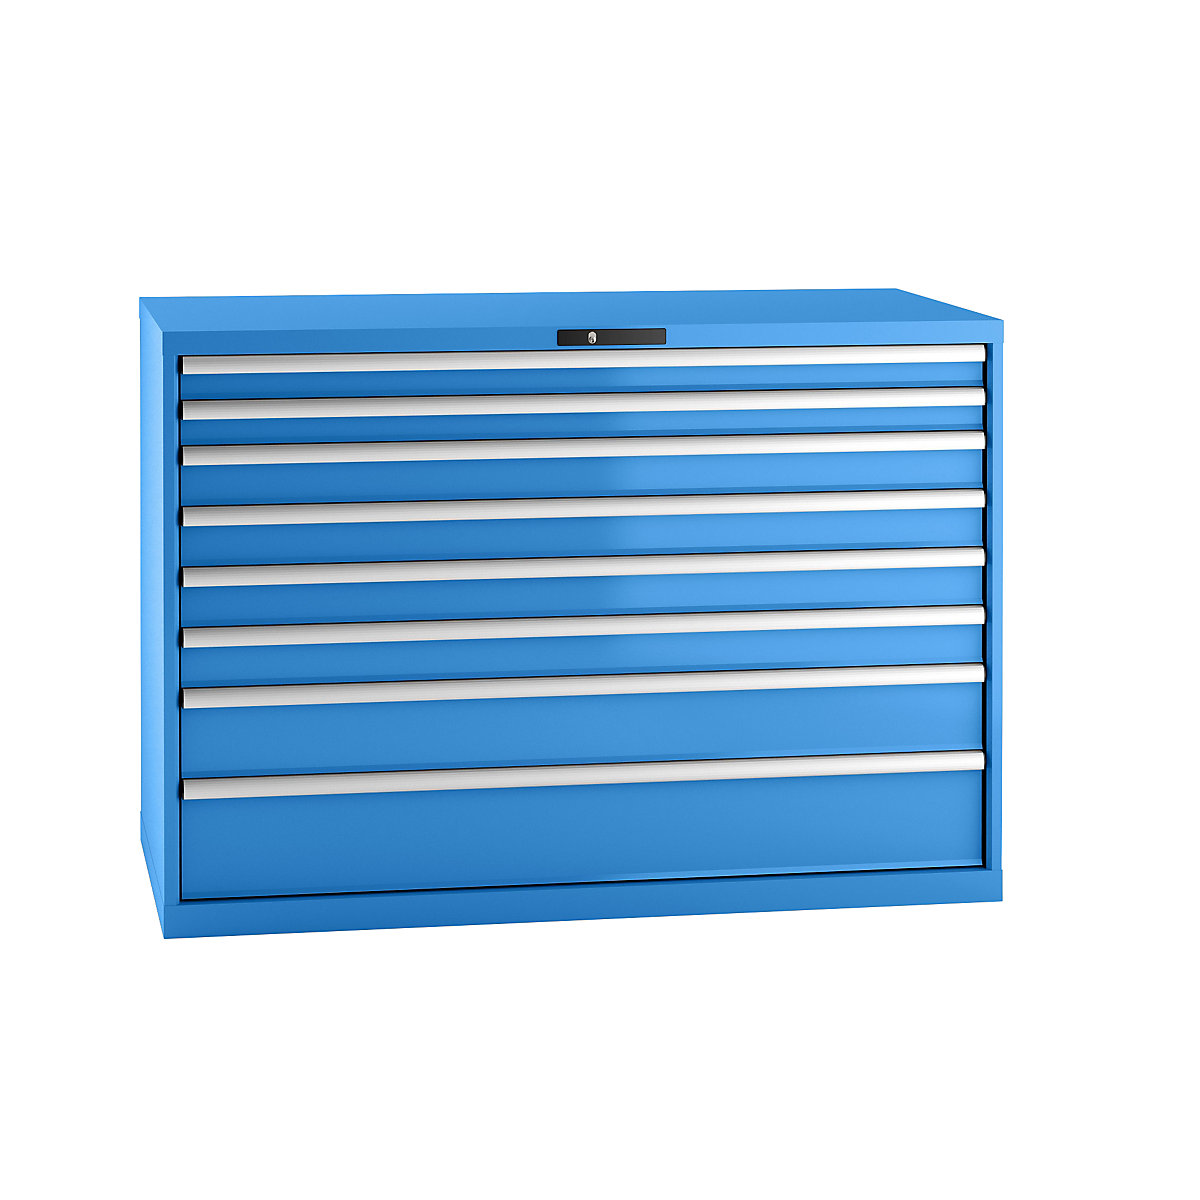 Predalnik, jeklena pločevina – LISTA, VxŠ 1000 x 1431 mm, 8 predalov, nosilnost 75 kg, svetlo modra-16